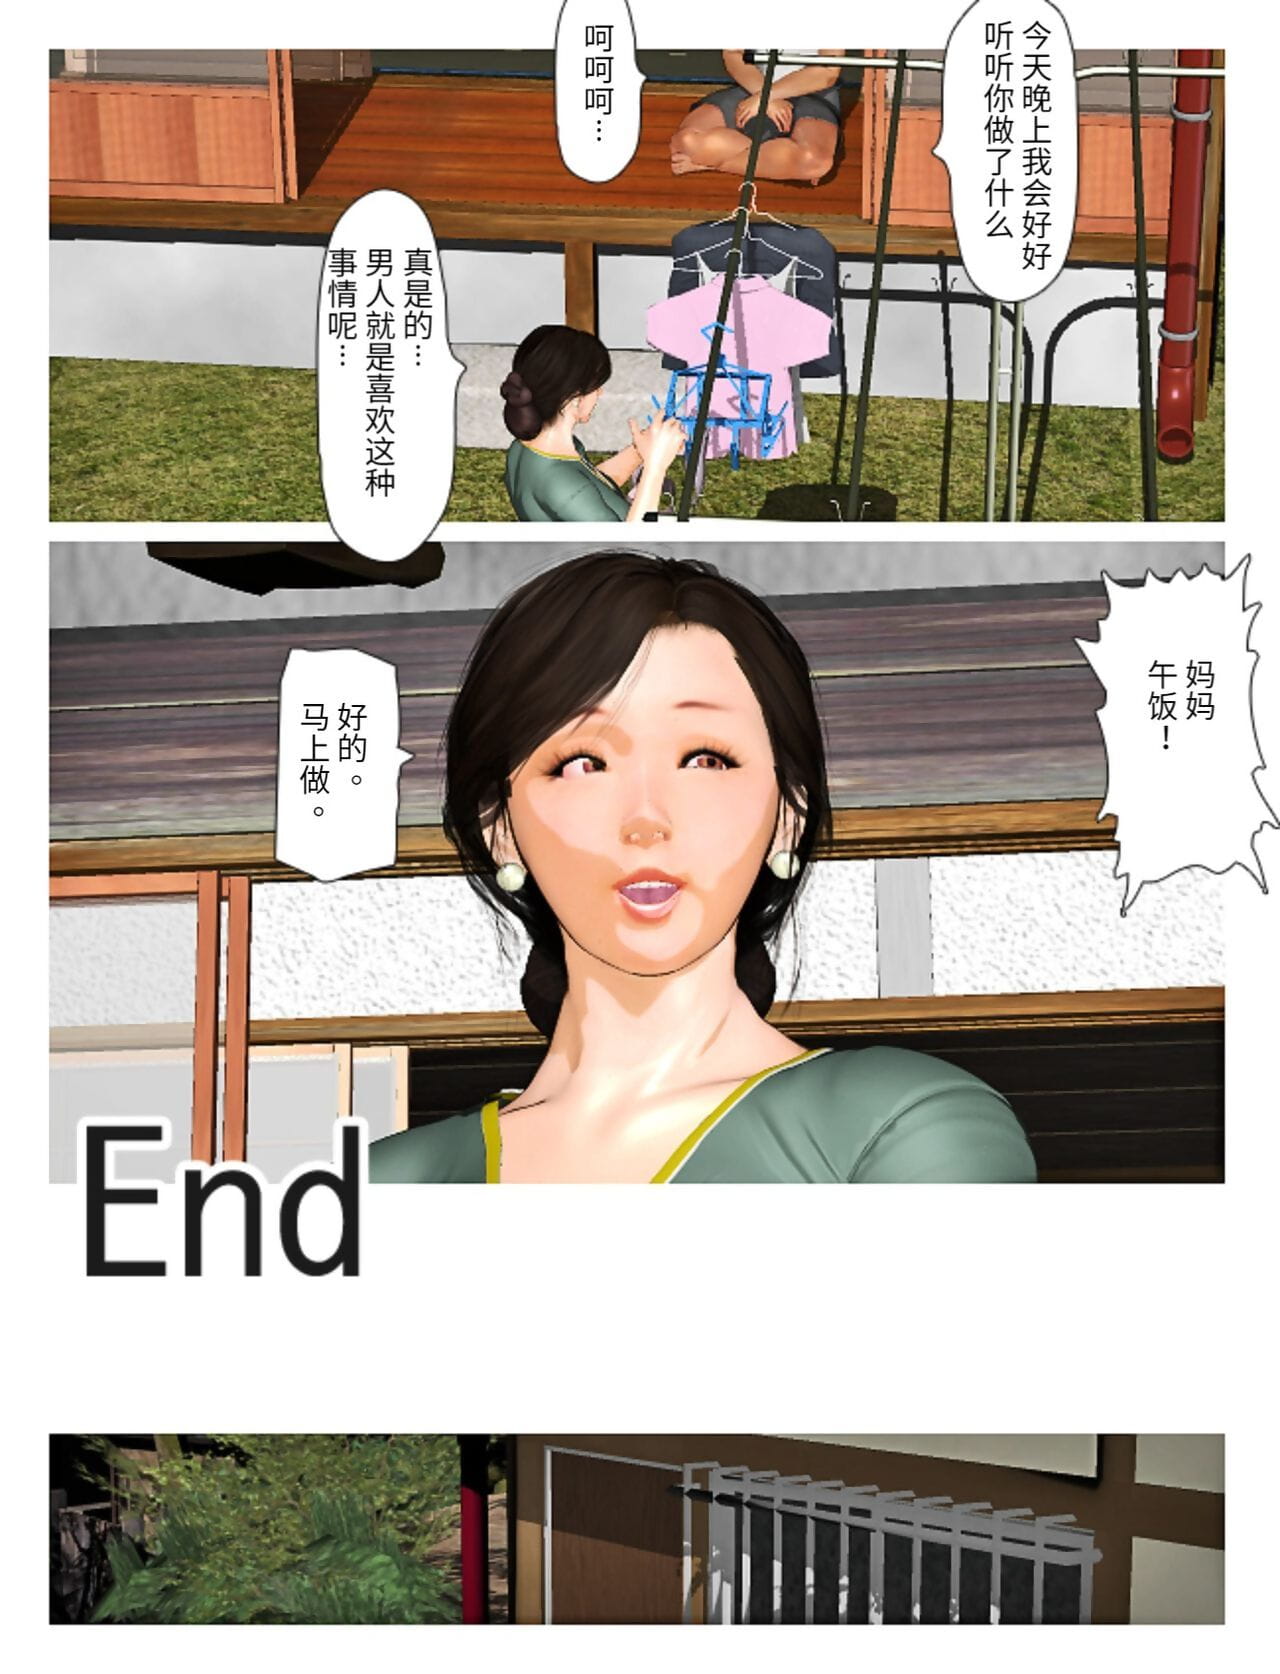 Kyou ไม่ misako ของเดือนมุฮัรร็อม 2019:4 ส่วนหนึ่ง 5 page 1